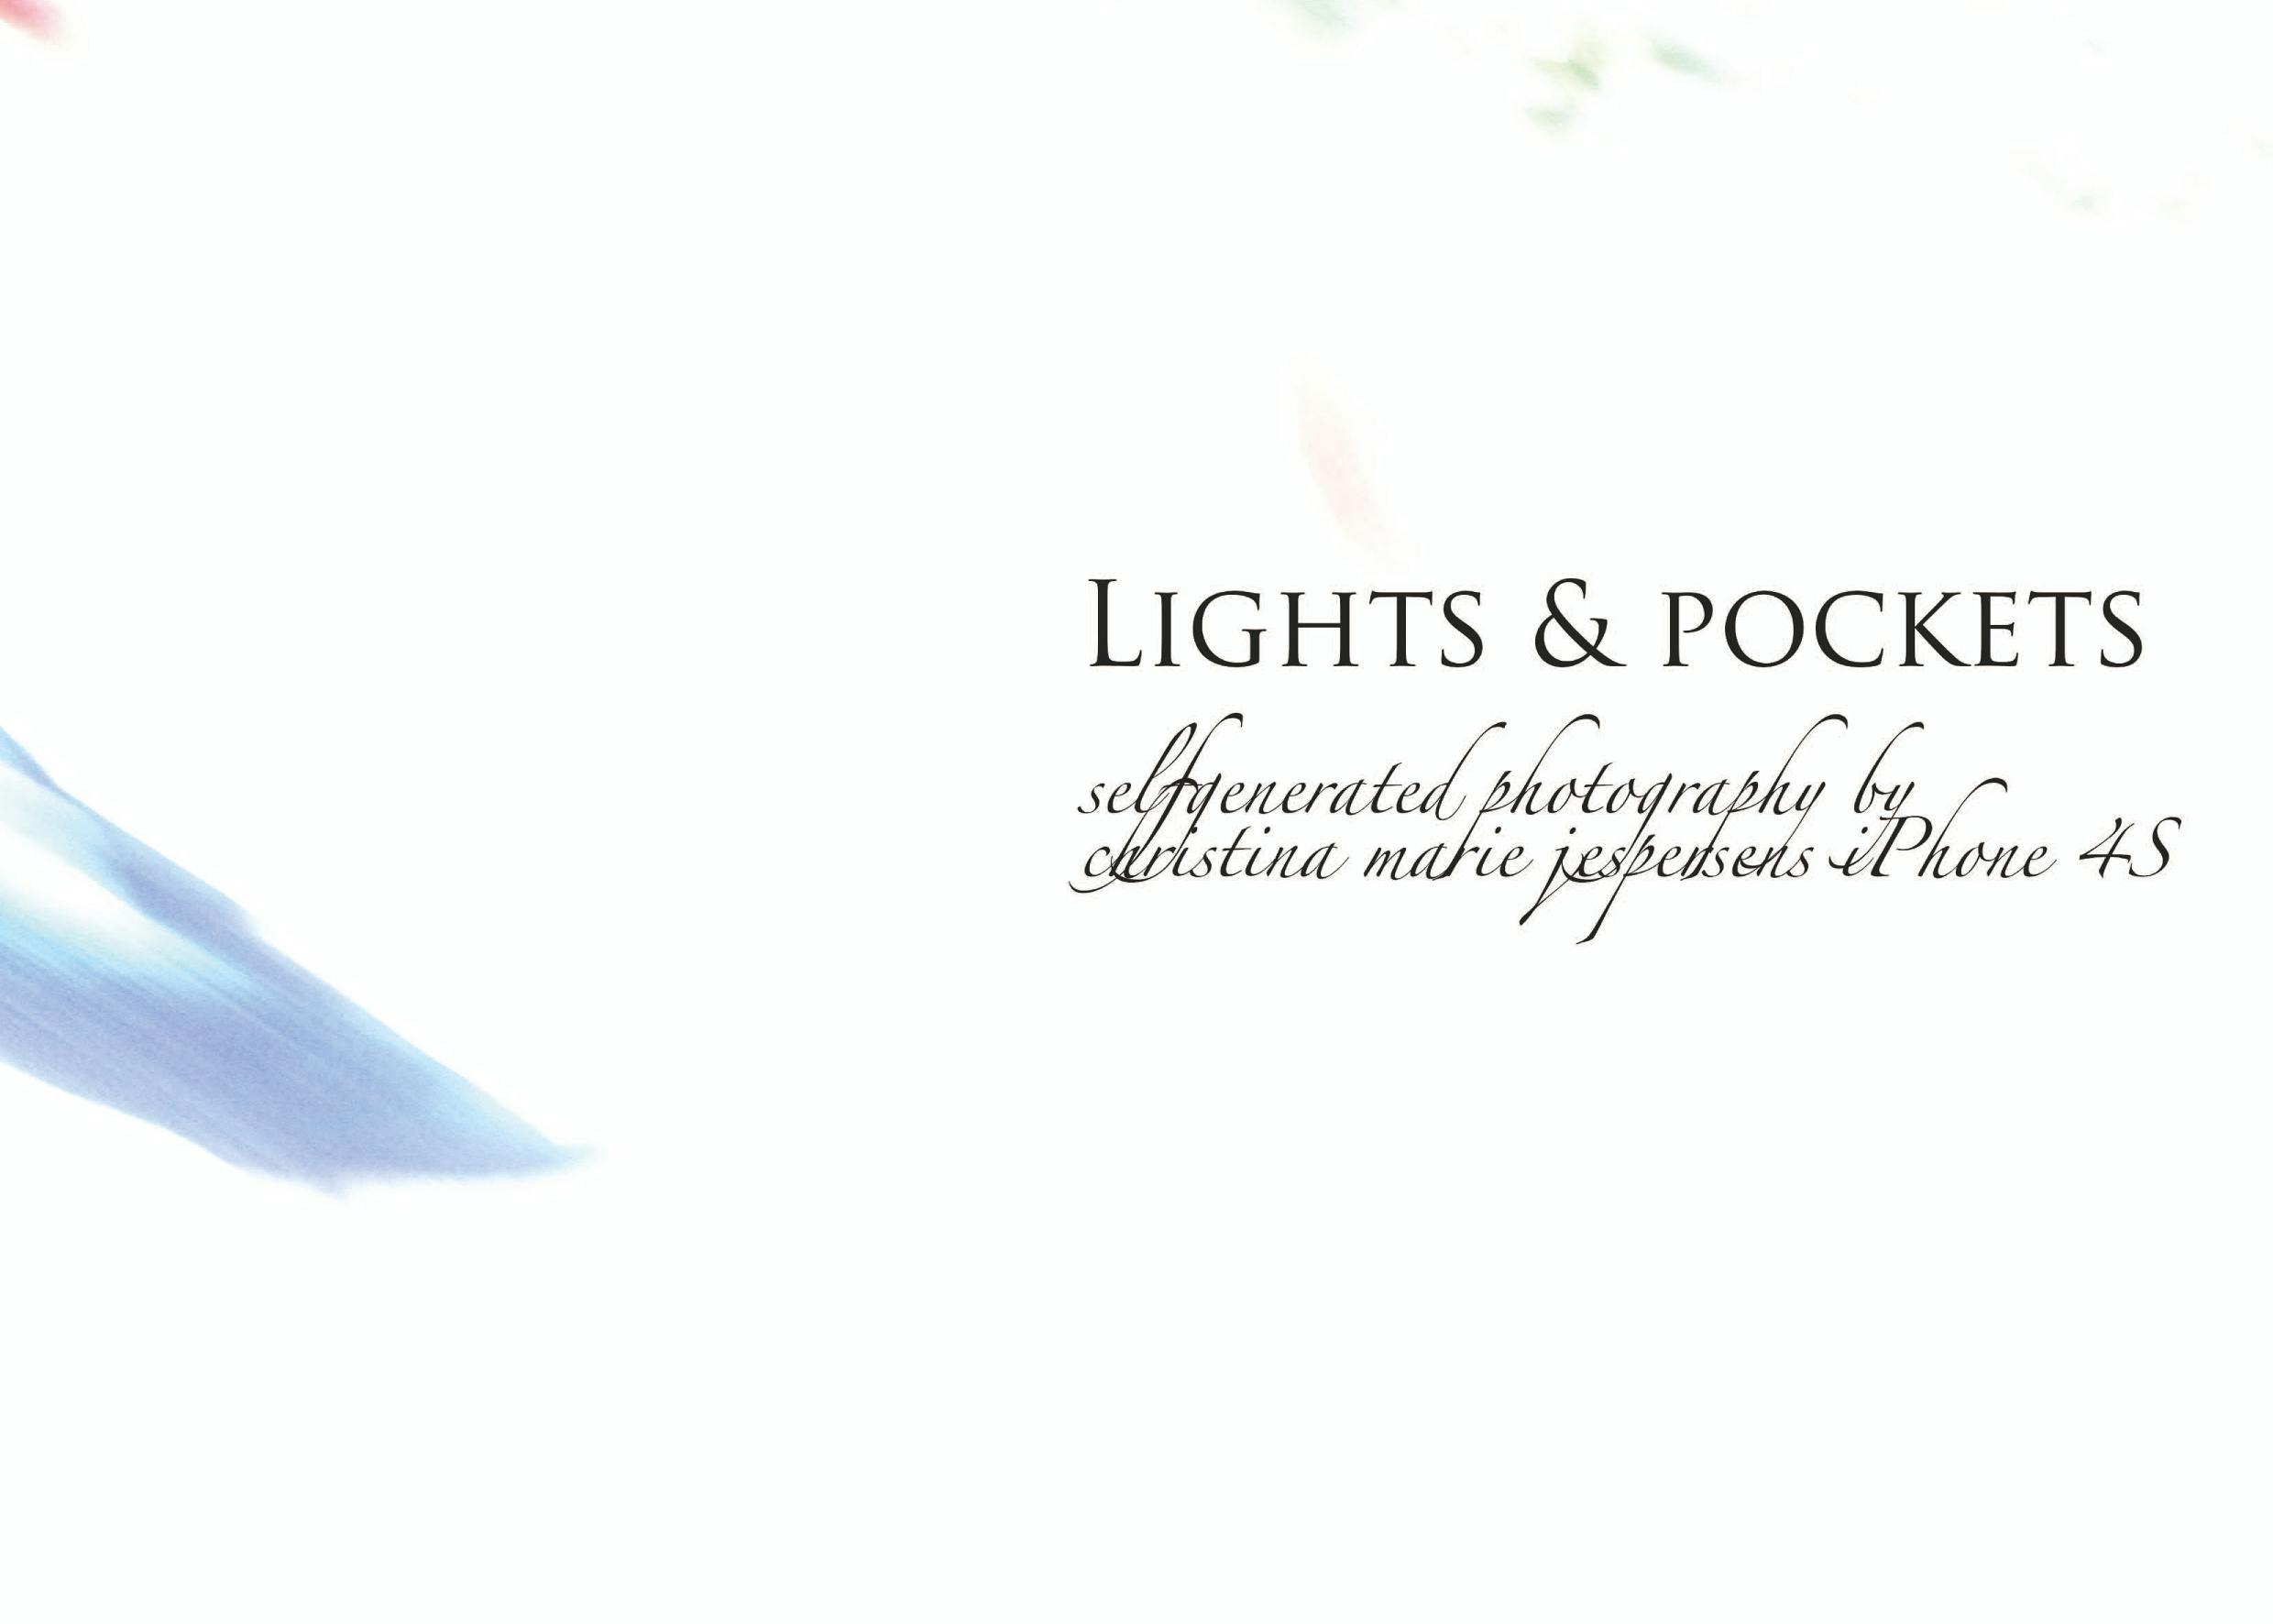 Lights & pockets - IPhone 4S Jespersen